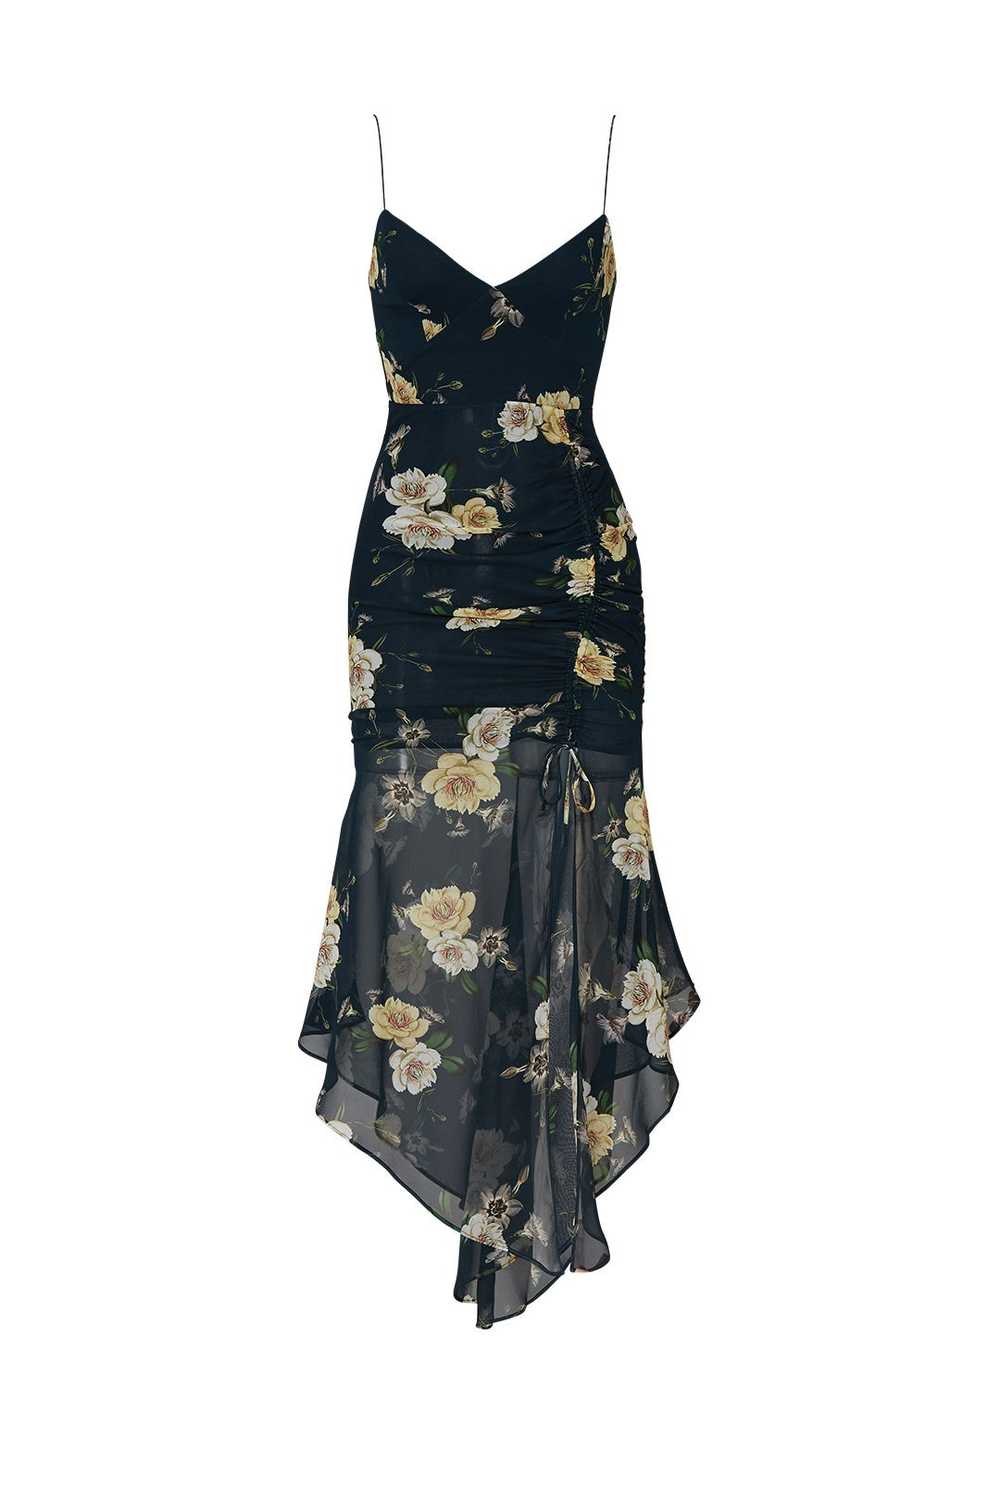 Nicholas Navy Floral Drawstring Dress - image 5